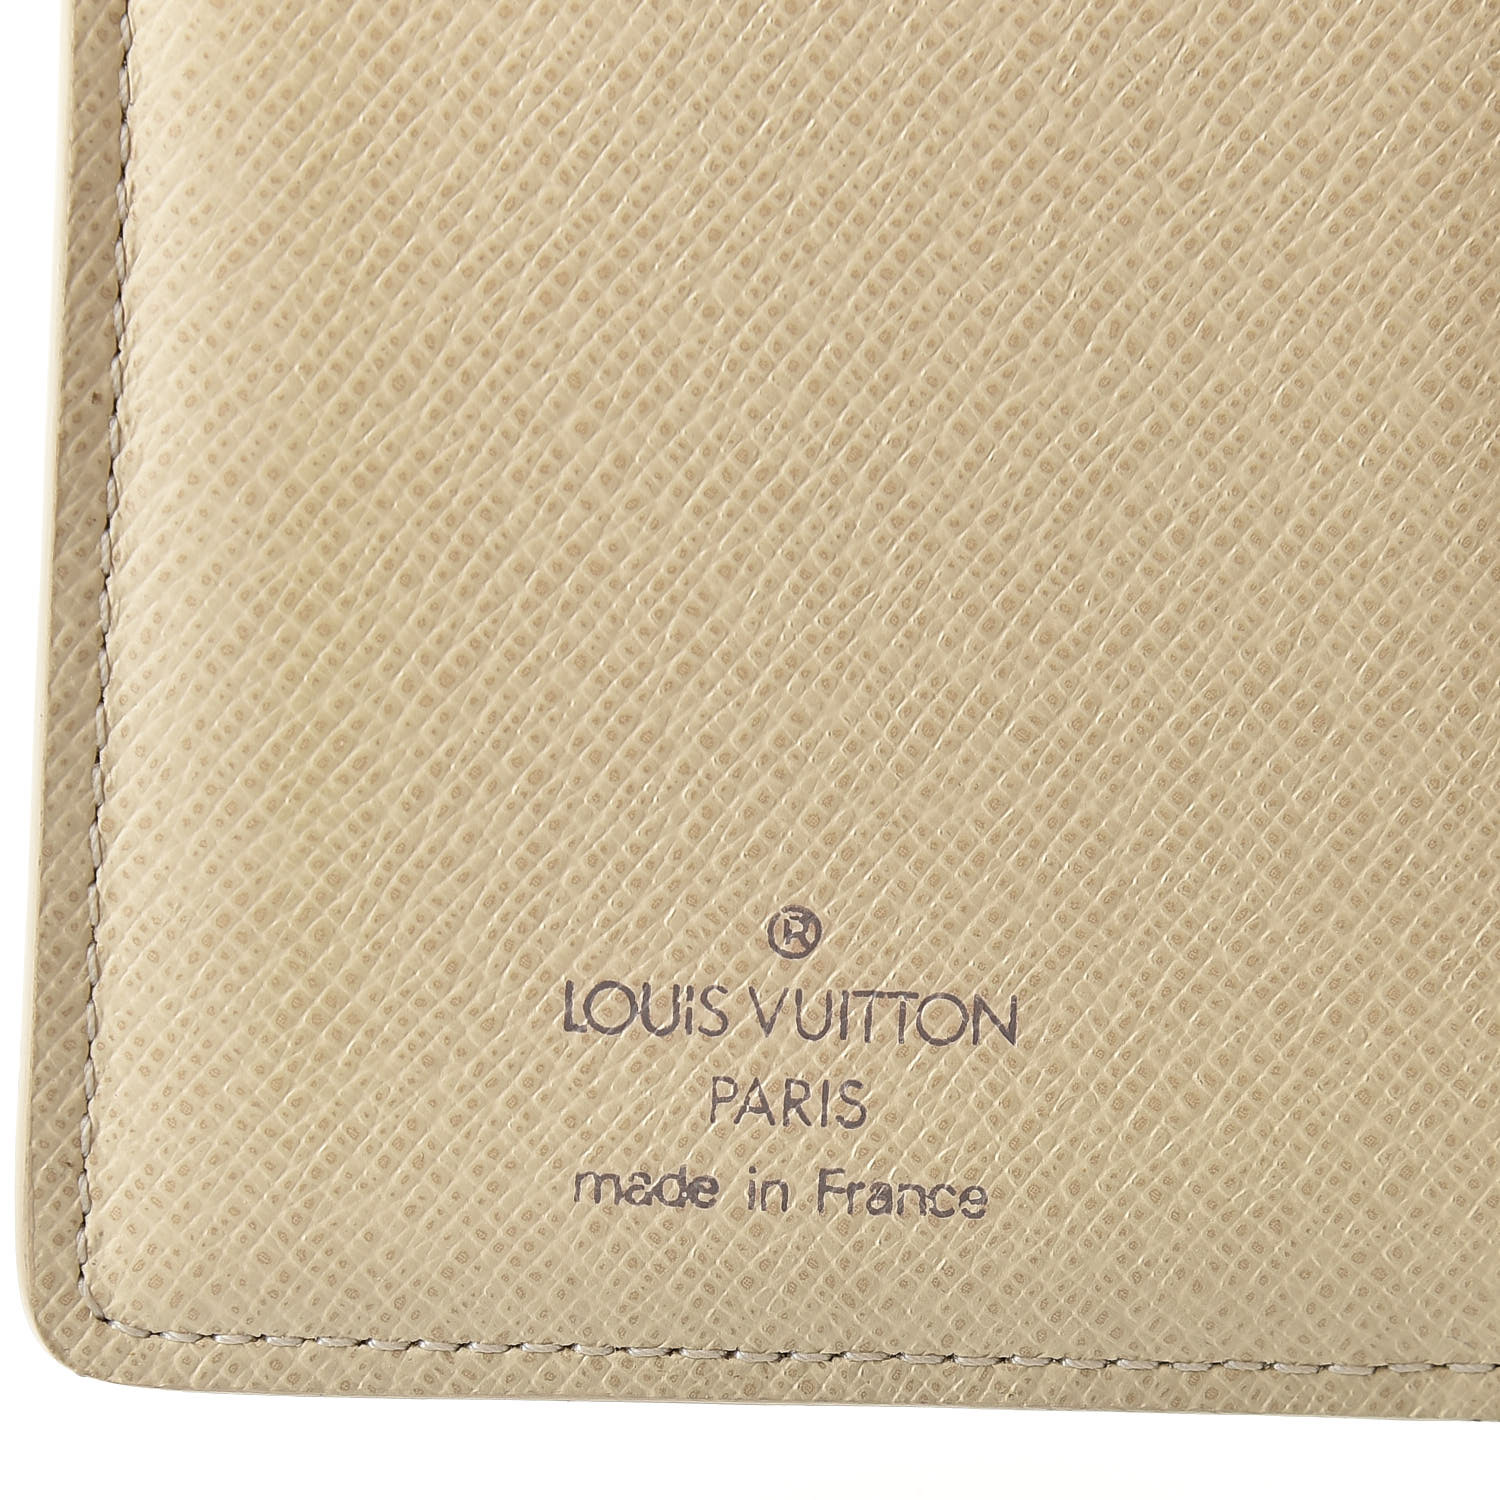 LOUIS VUITTON Damier Azur French Purse Wallet 507652